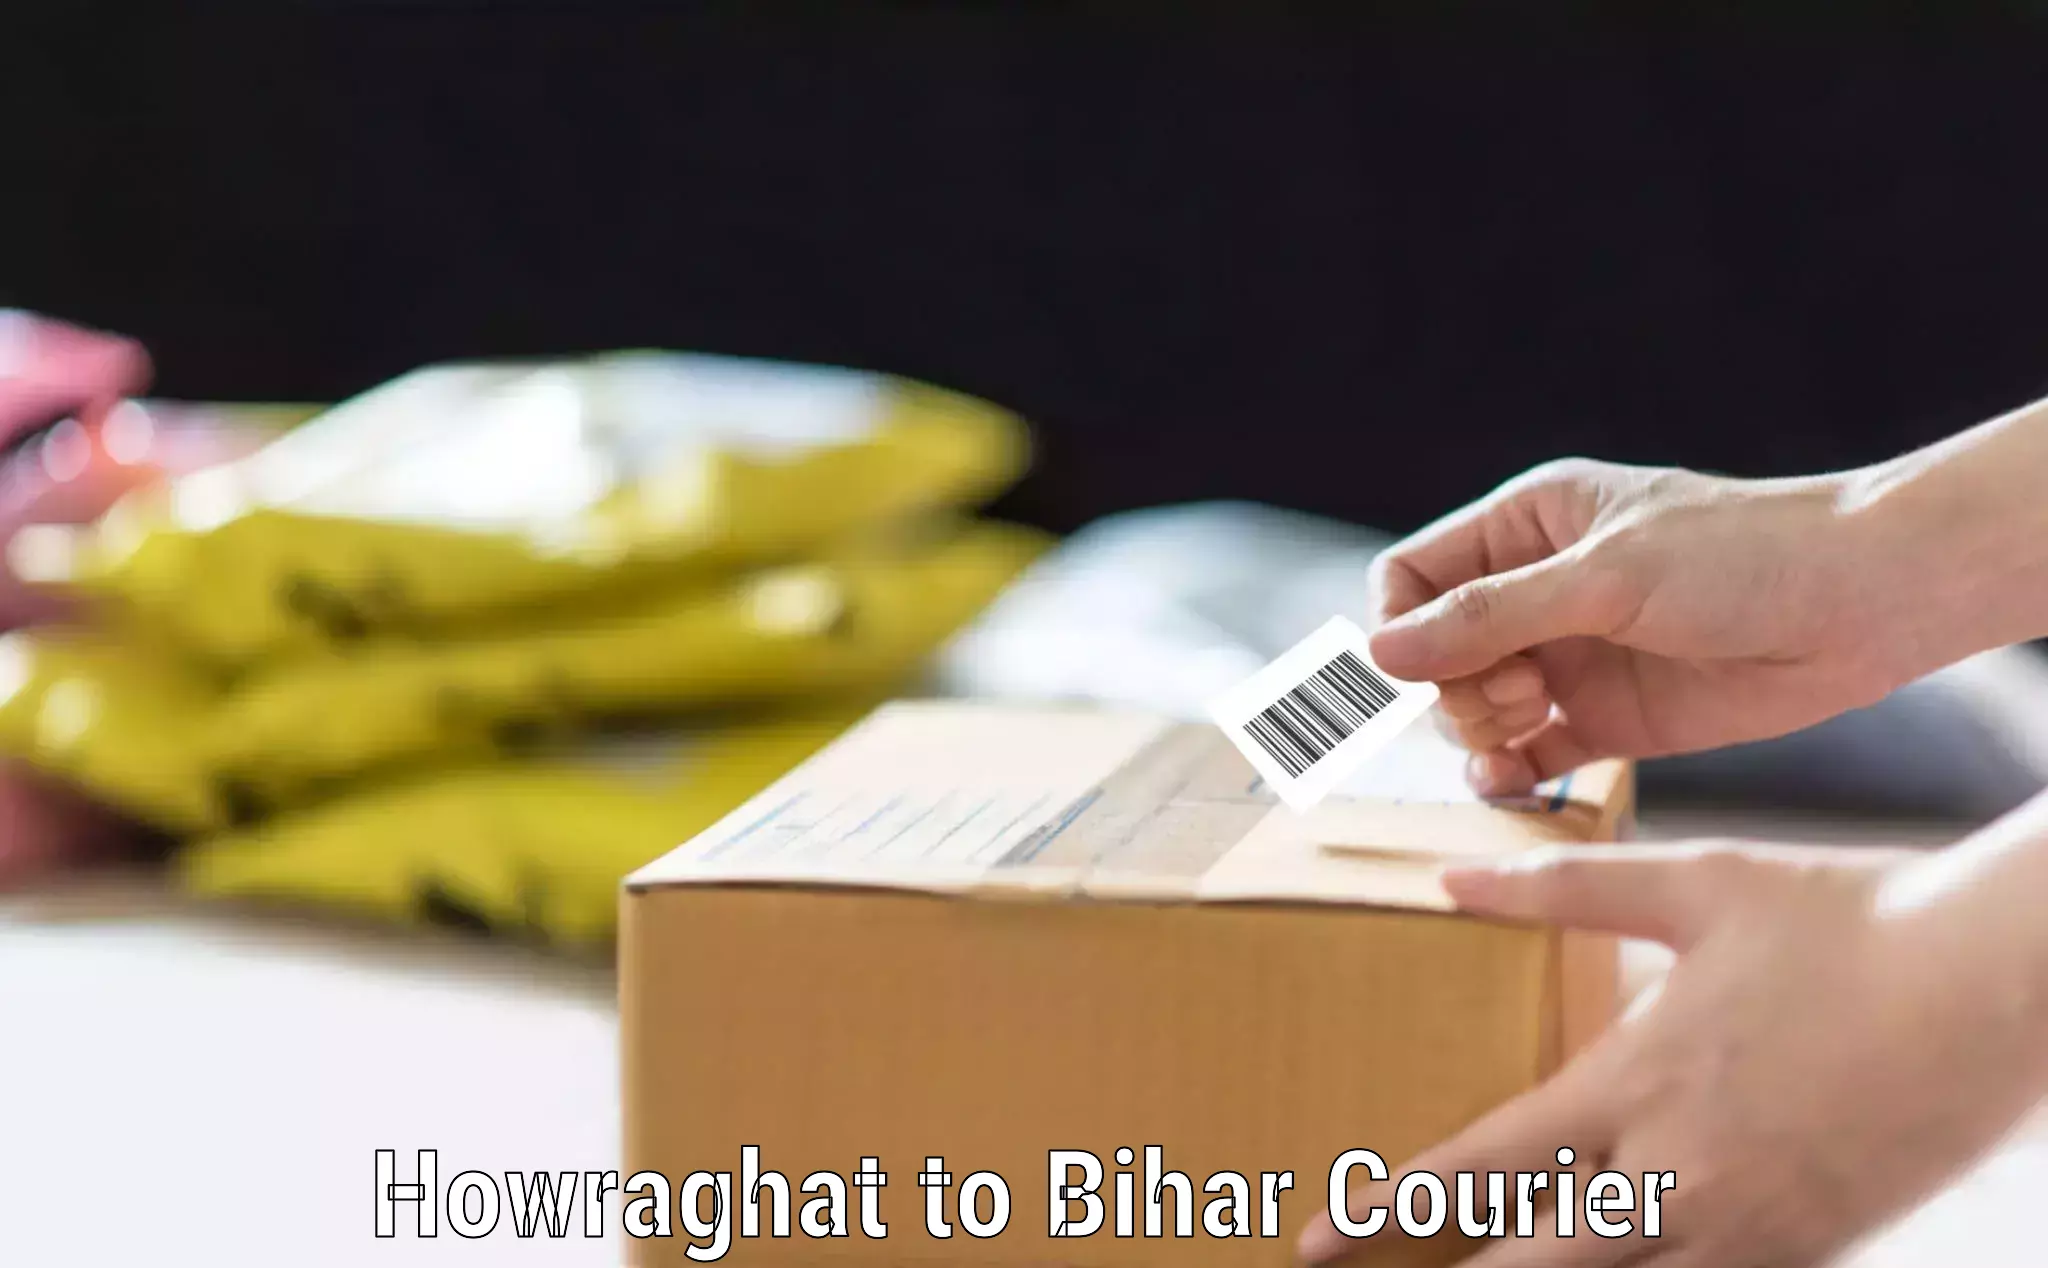 Baggage transport updates Howraghat to Bihar